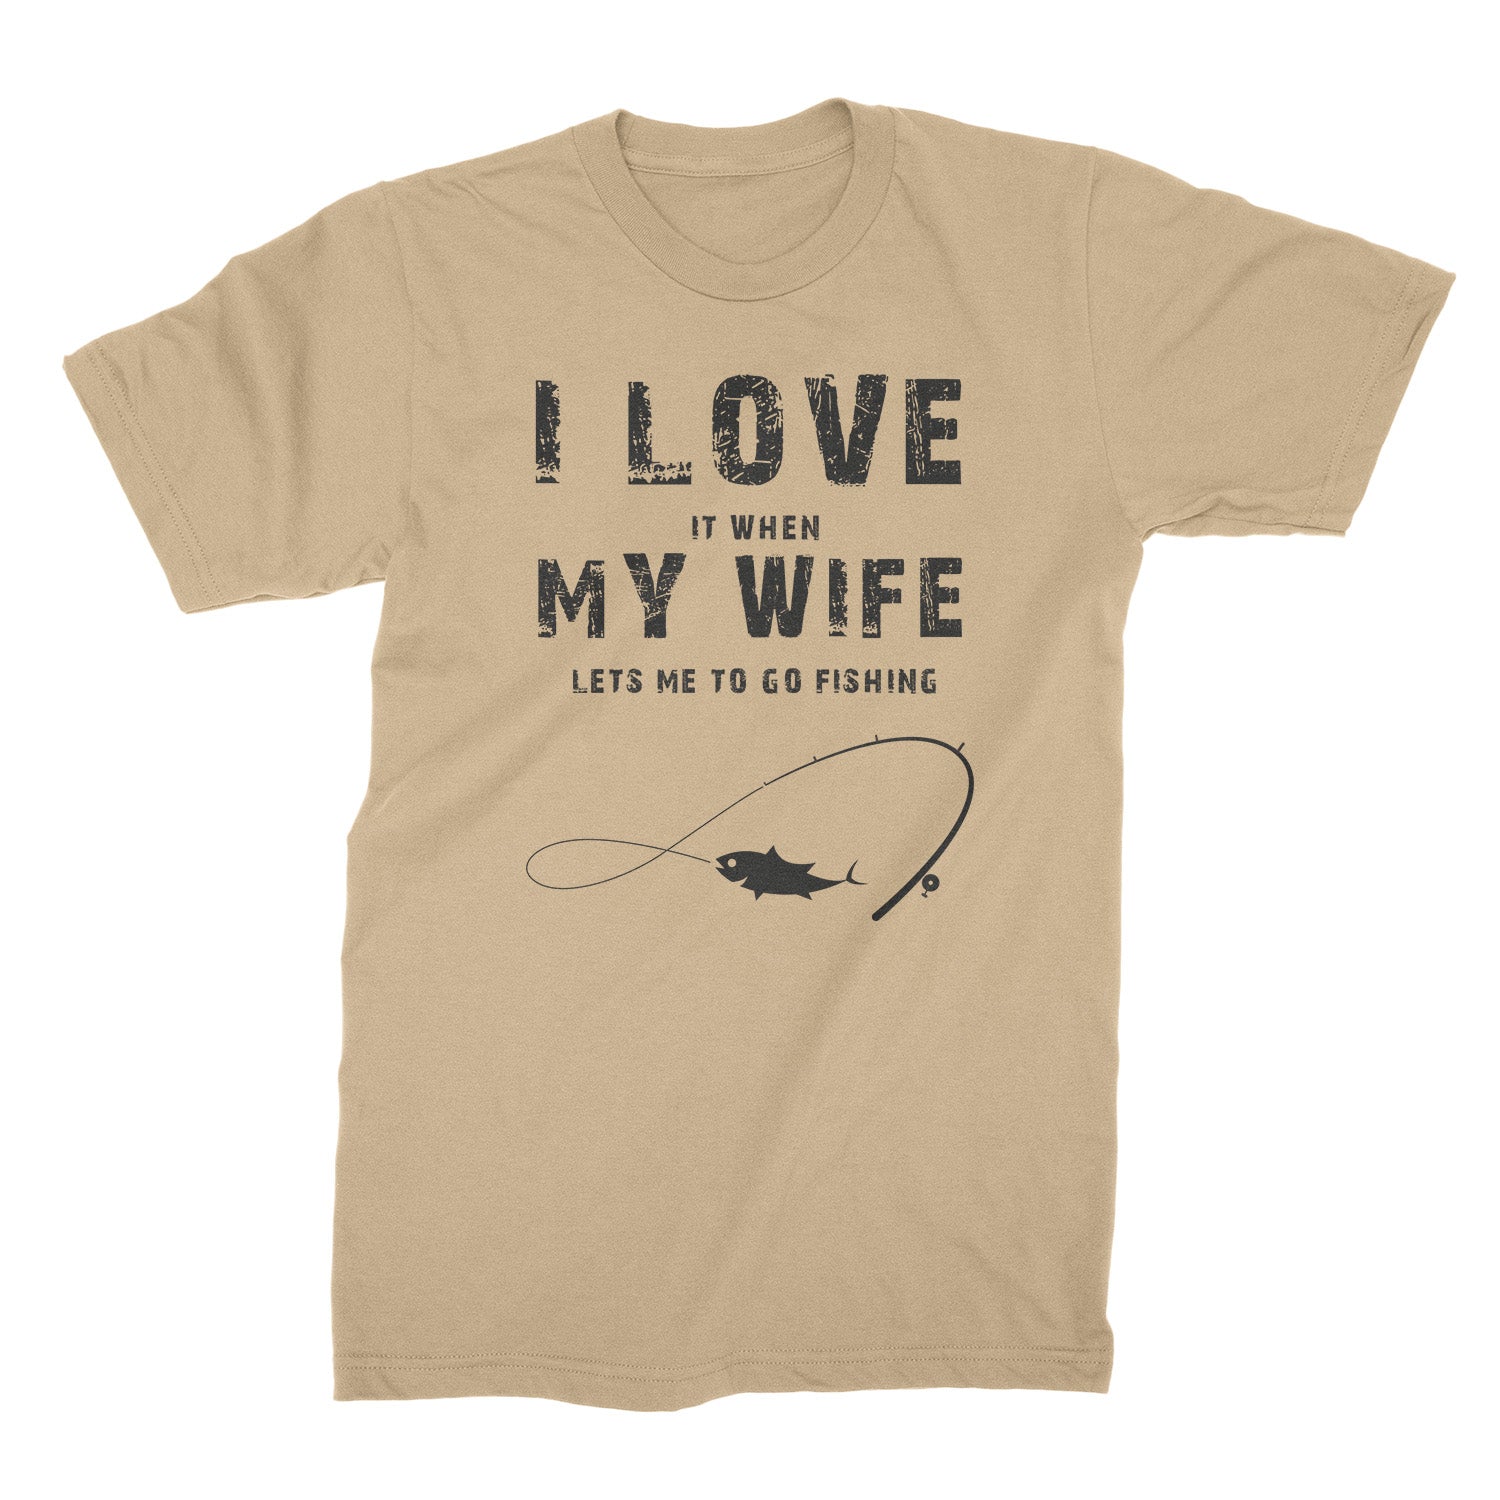 Wife Lets Me Go Fishing! Novelty Women's Tank Top T-Shirt